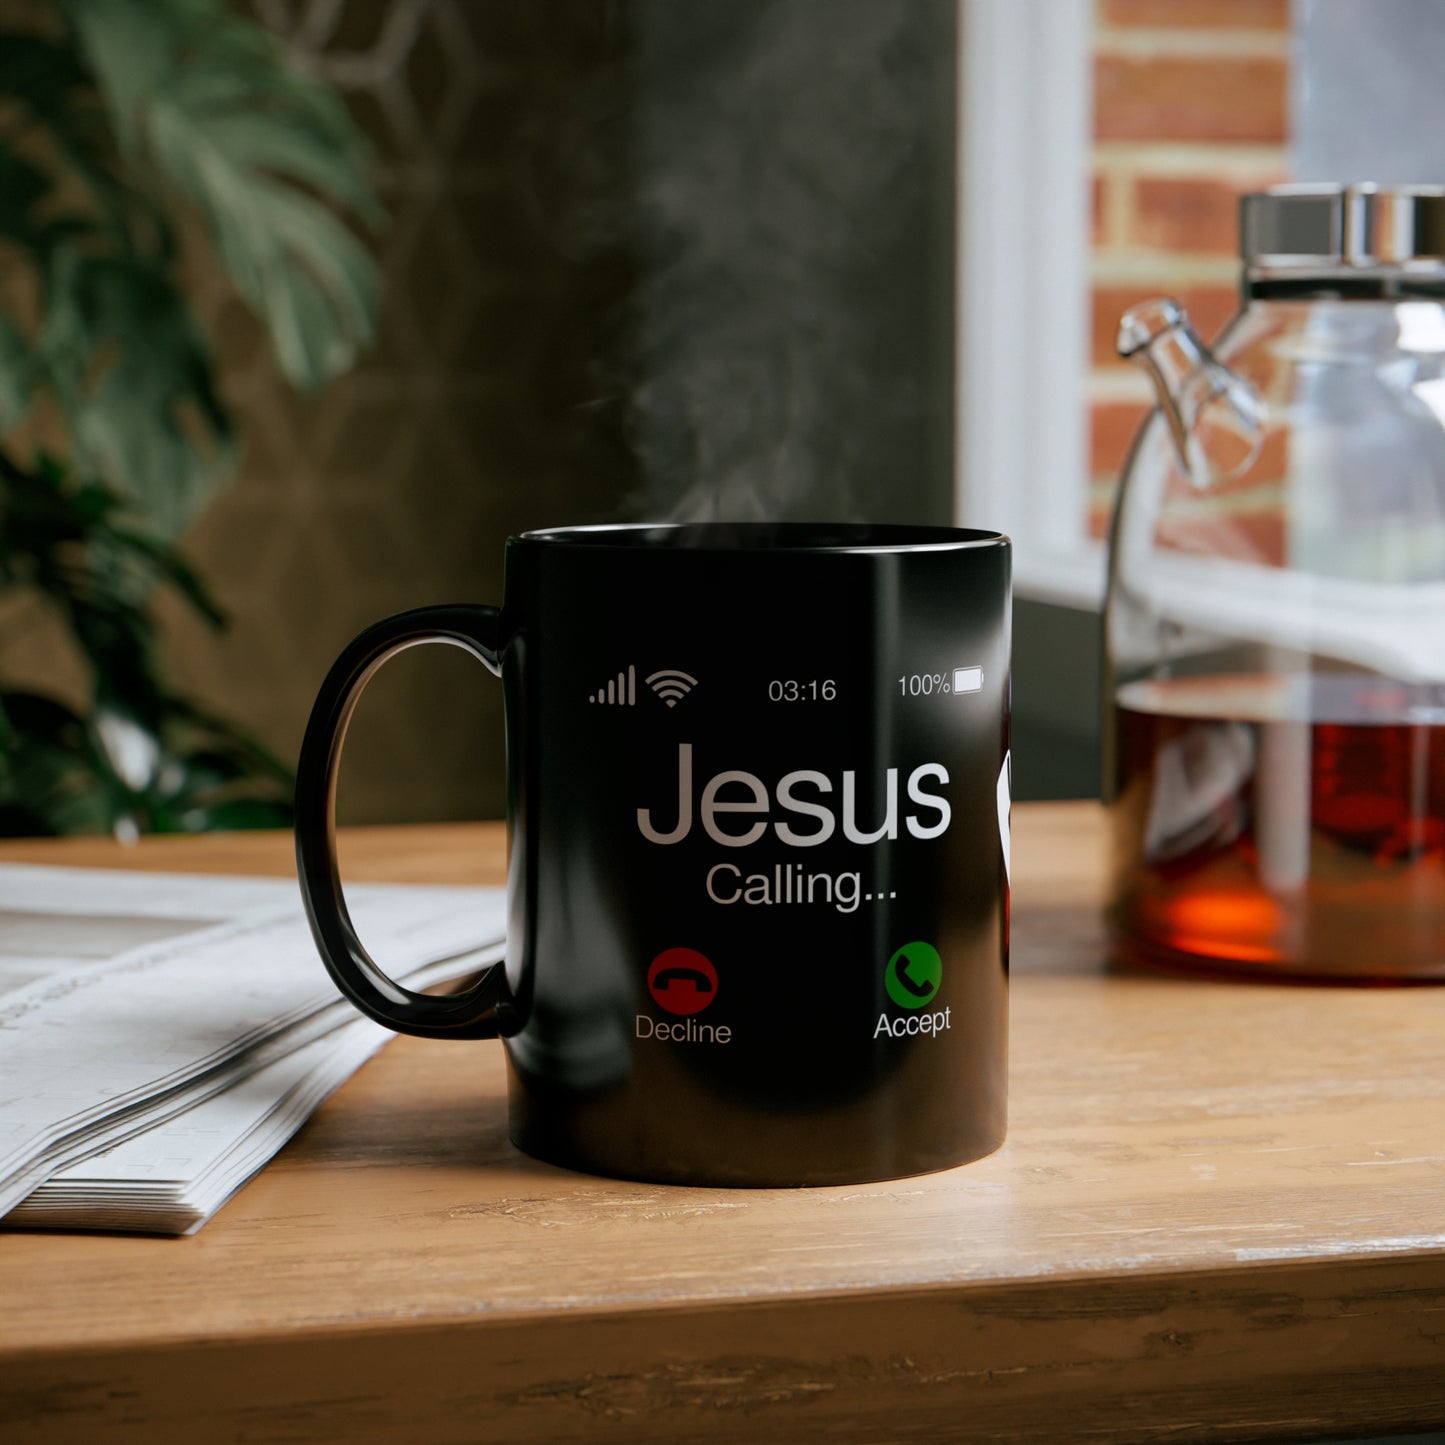 JESUS CALLING Mug - MUGSCITY - Free Shipping